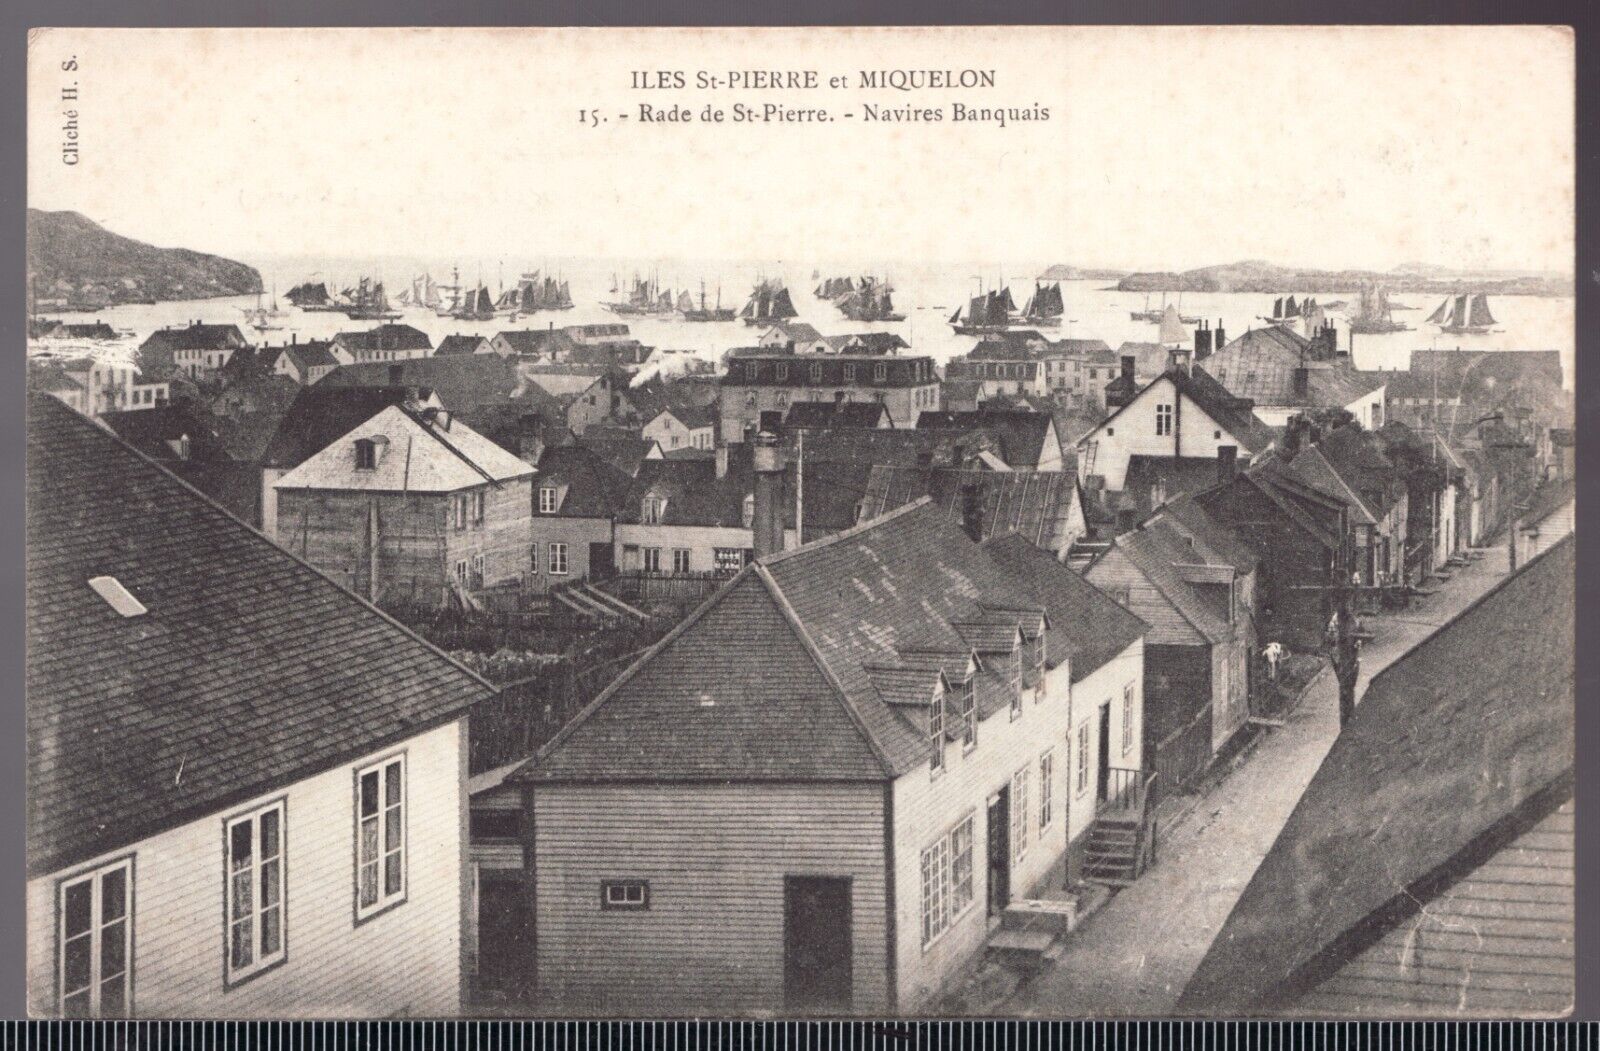 c.1910 Postcard - unposted - St-Pierre et Miquelon view of town & tall ships